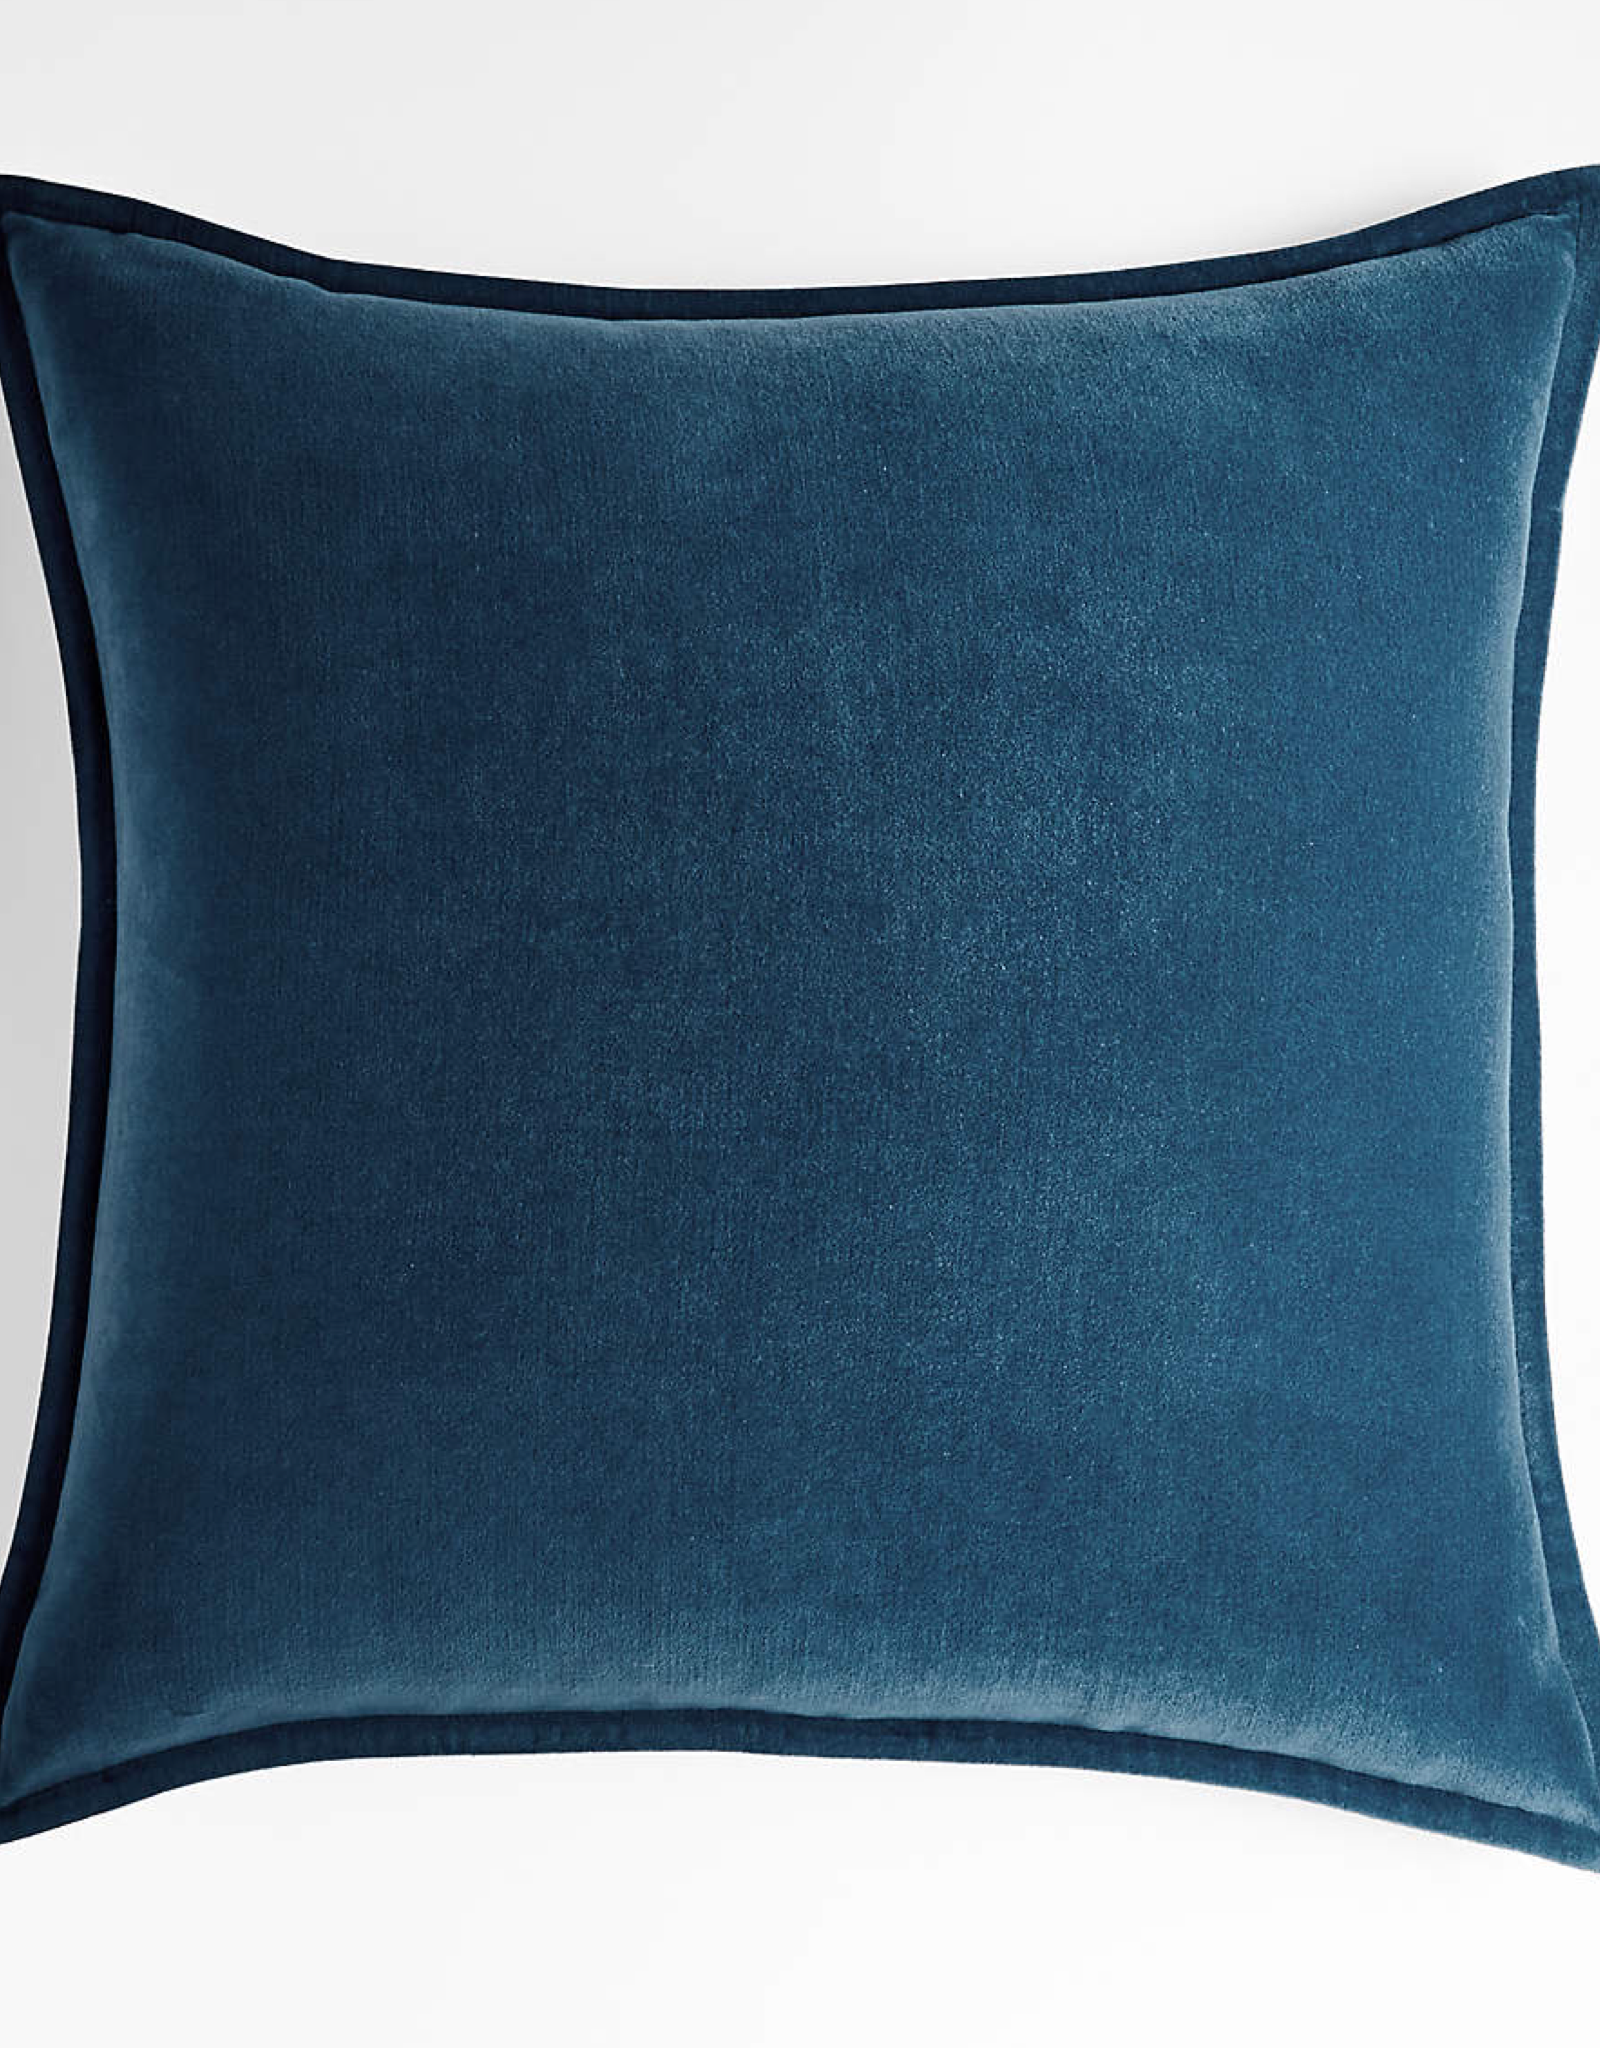 Daniadown Cushions Daniadown Dutch Velvet Persian Blue Toss 18 x18